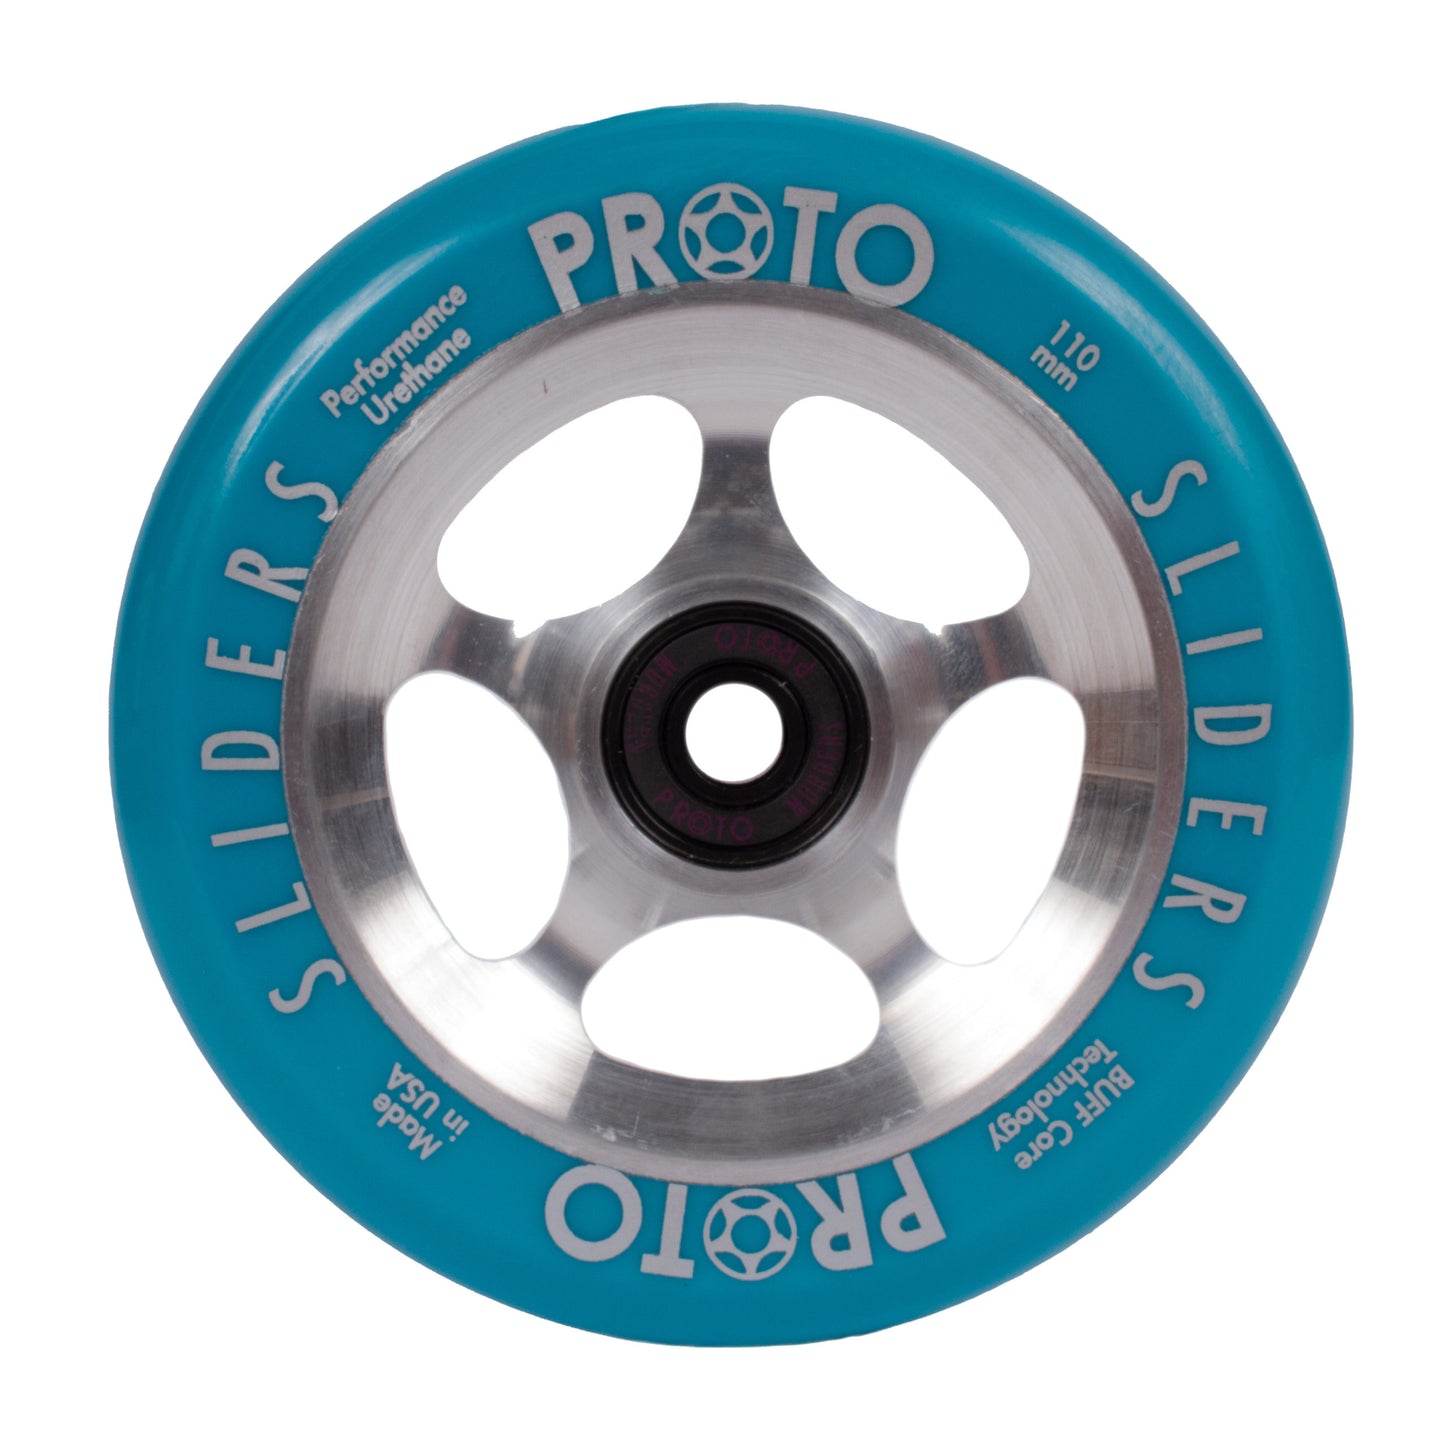 PROTO – StarBright Sliders 110mm (Neon Blue on RAW)